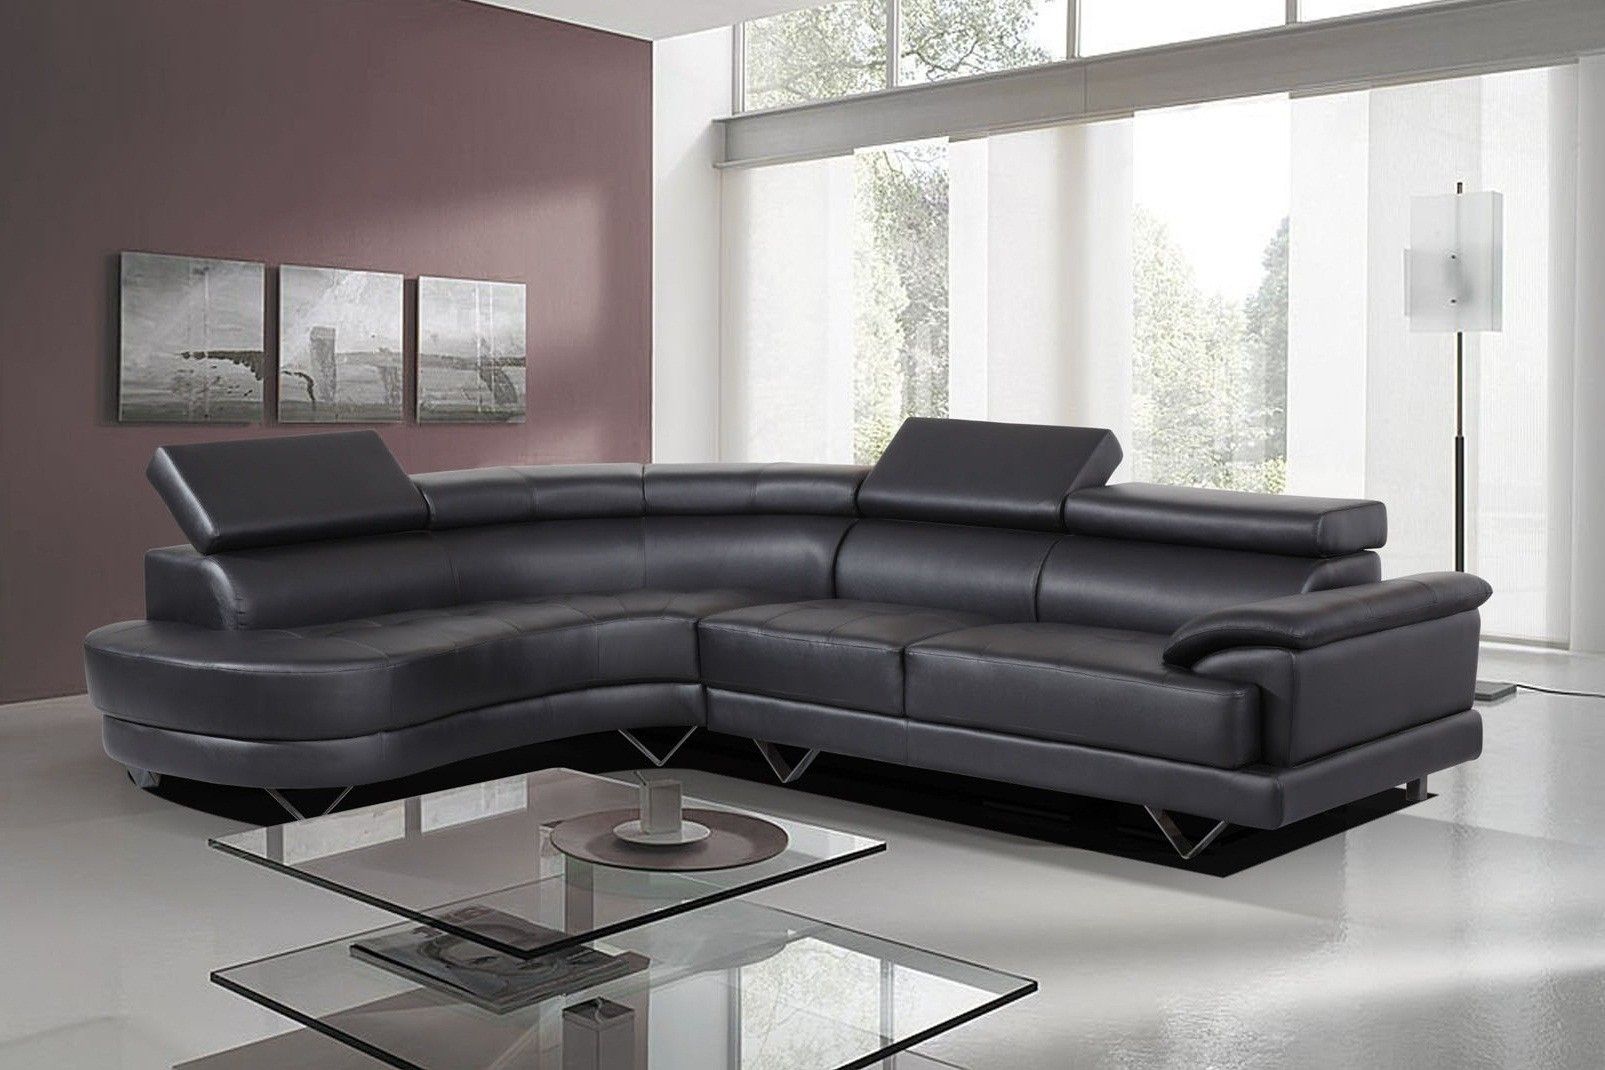 Cheap sofas uk online